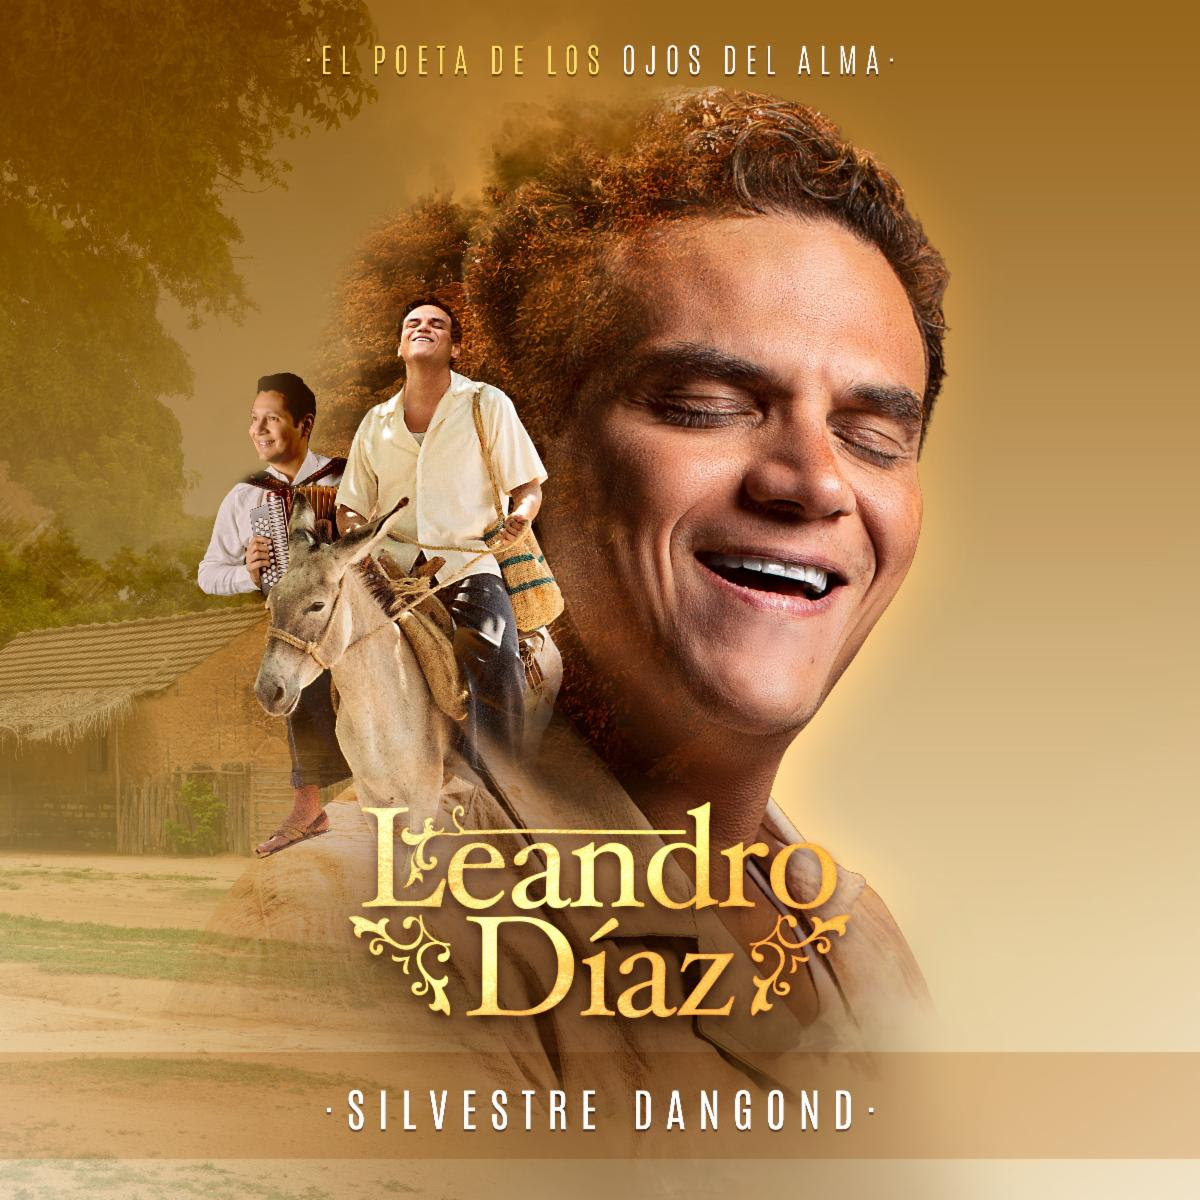 El nuevo álbum de Silvestre Dangond en homenaje a Leandro Diaz  @SilvestreFDC